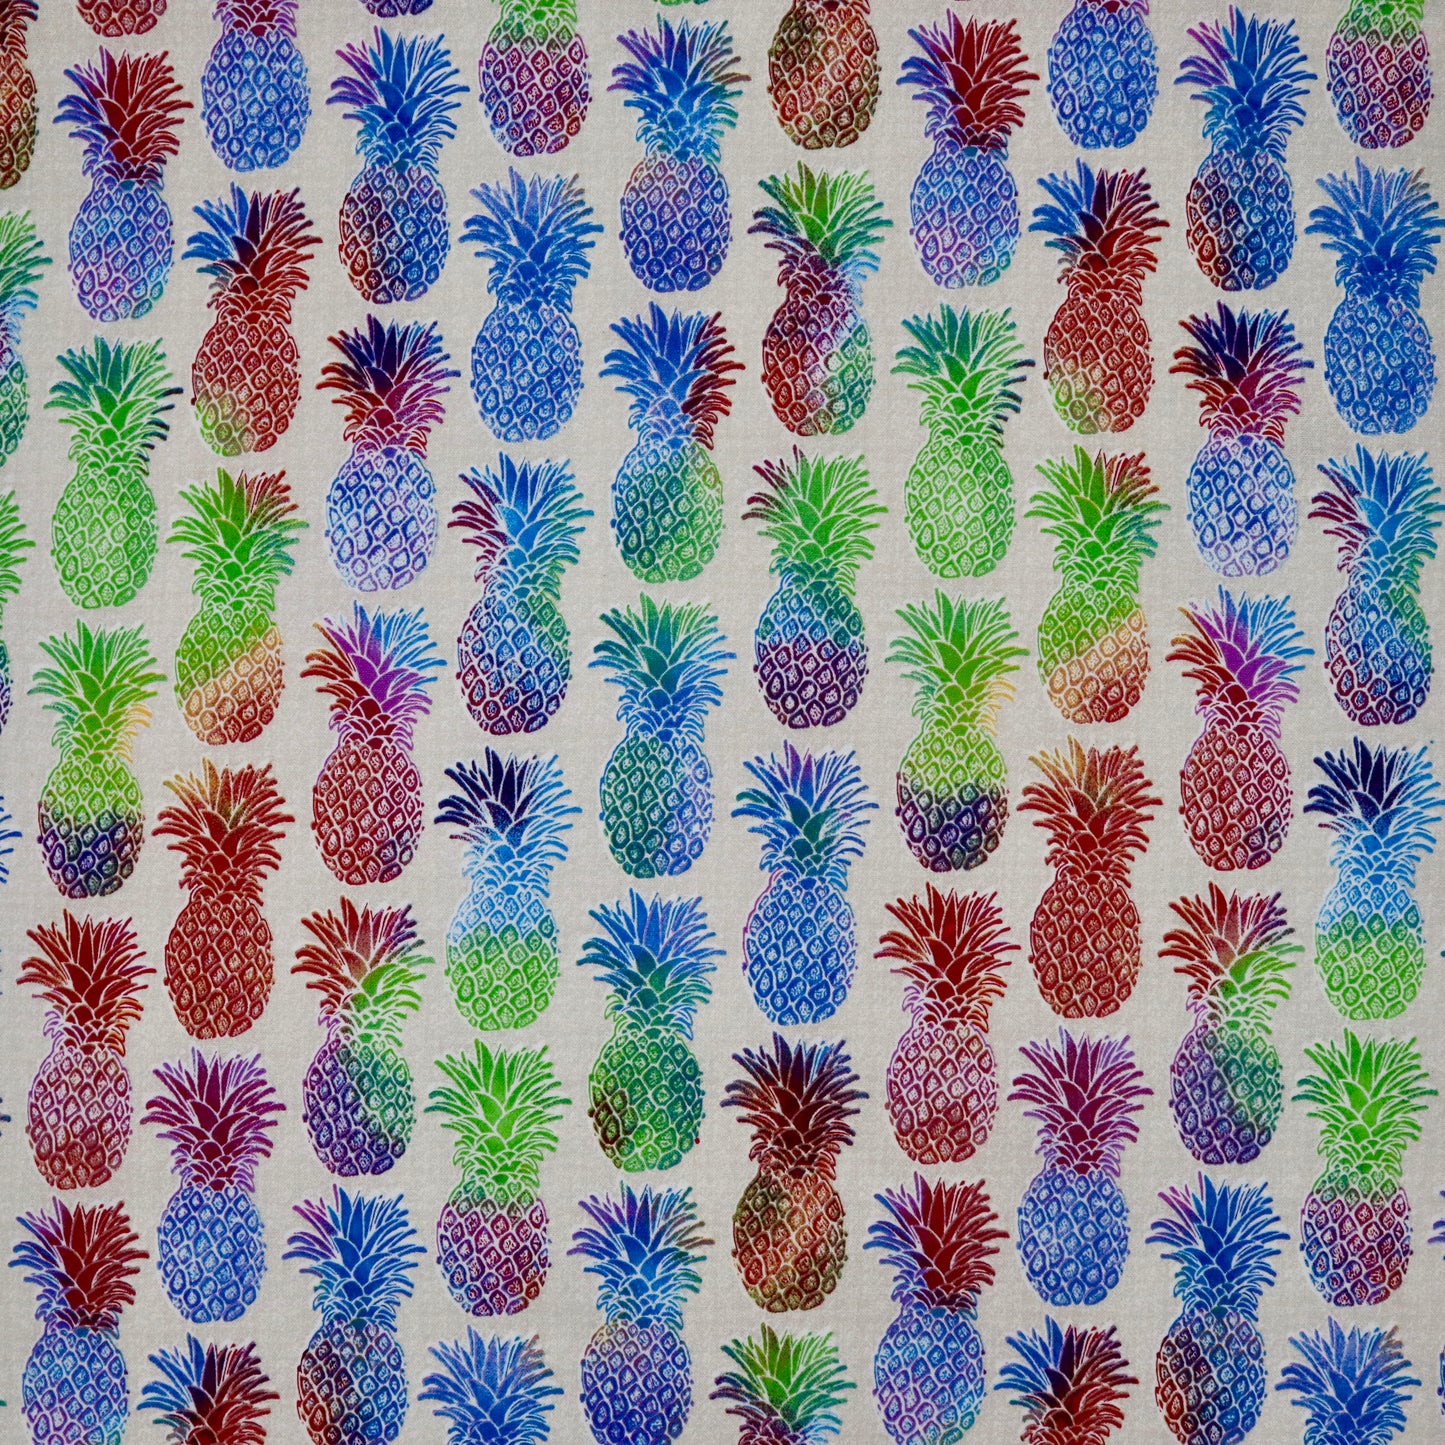 Ombré Pineapples - Quilting Cotton